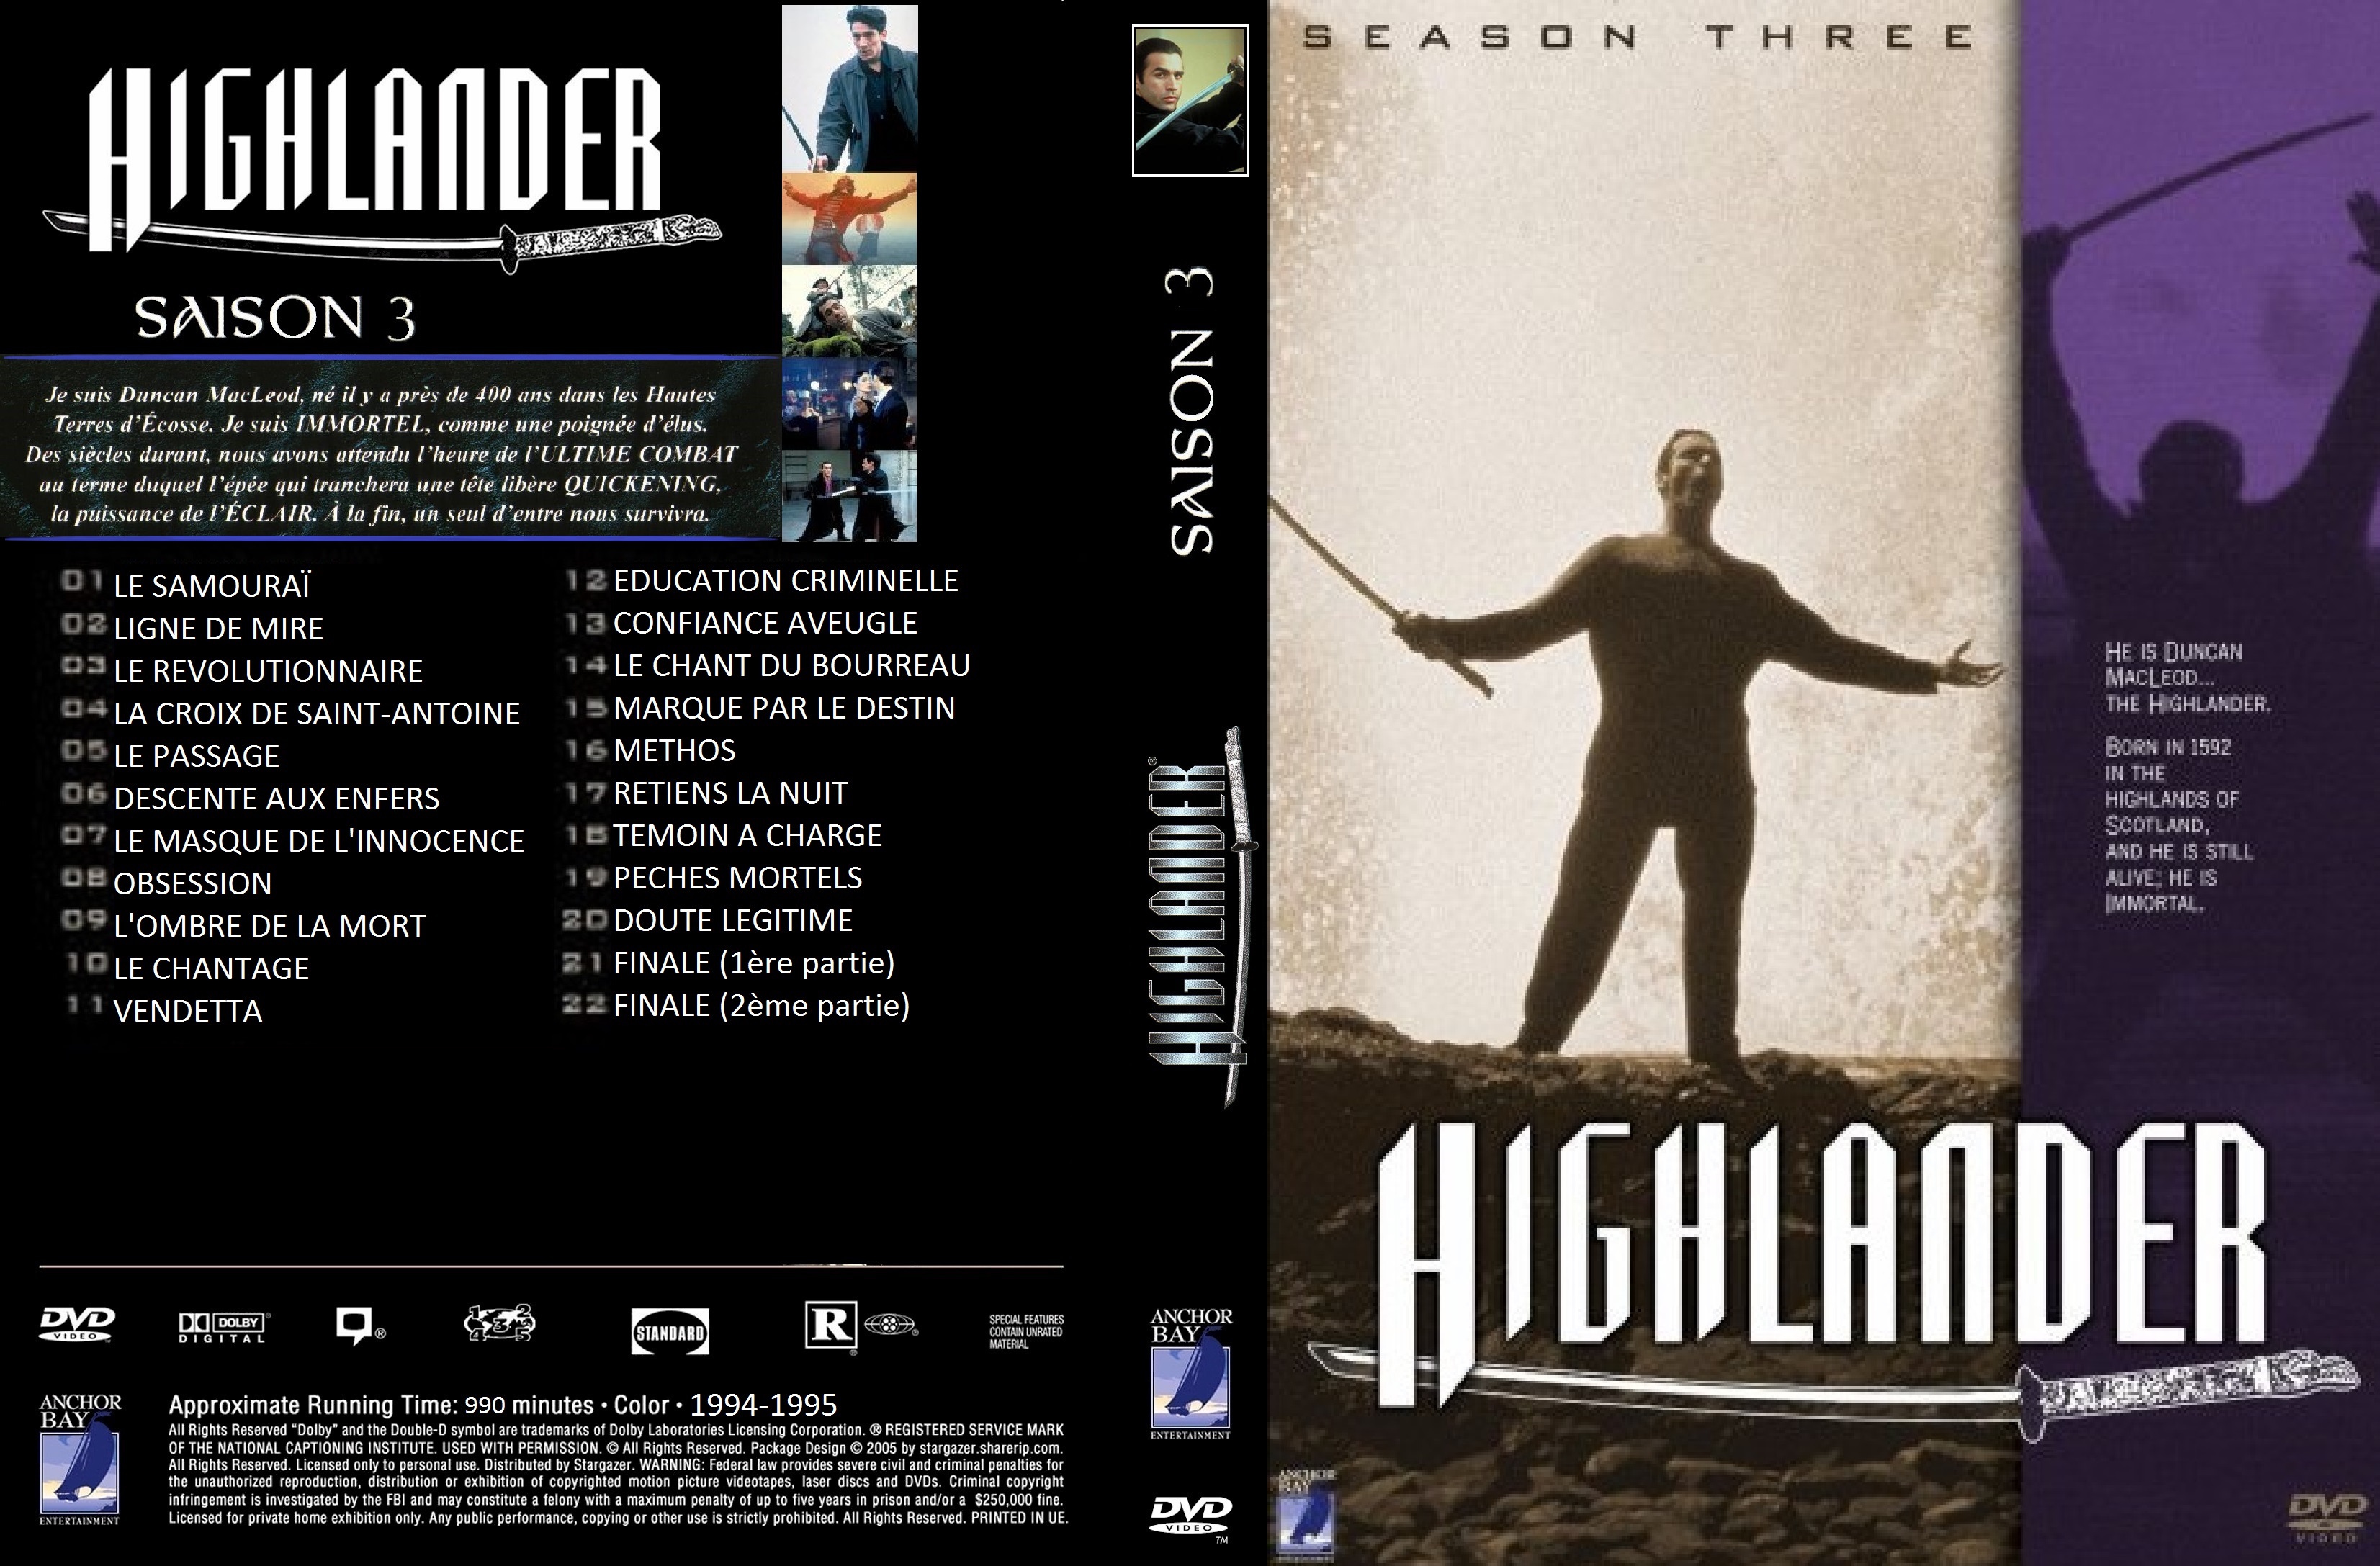 Jaquette DVD Highlander saison 3 custom 